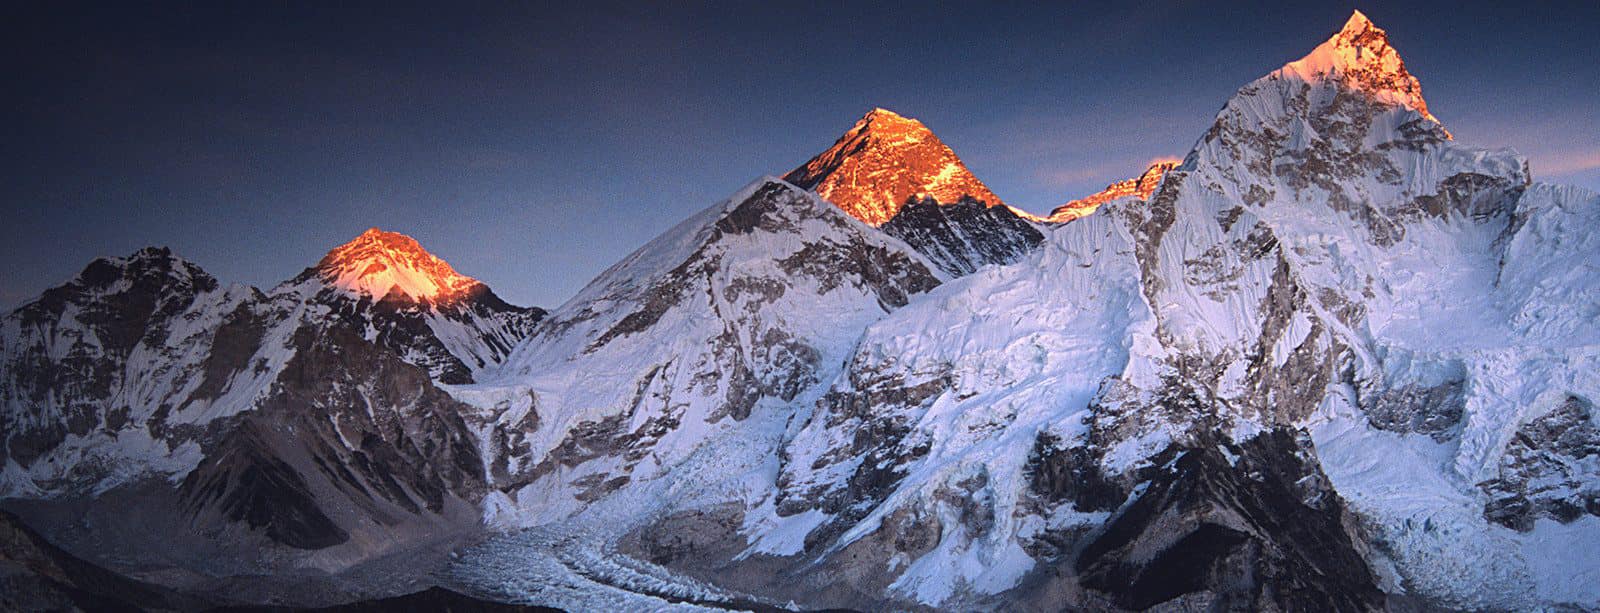 Changtse, Everest ( 8850m ) and Nuptse ( 7861m ) from Kallar Pattar